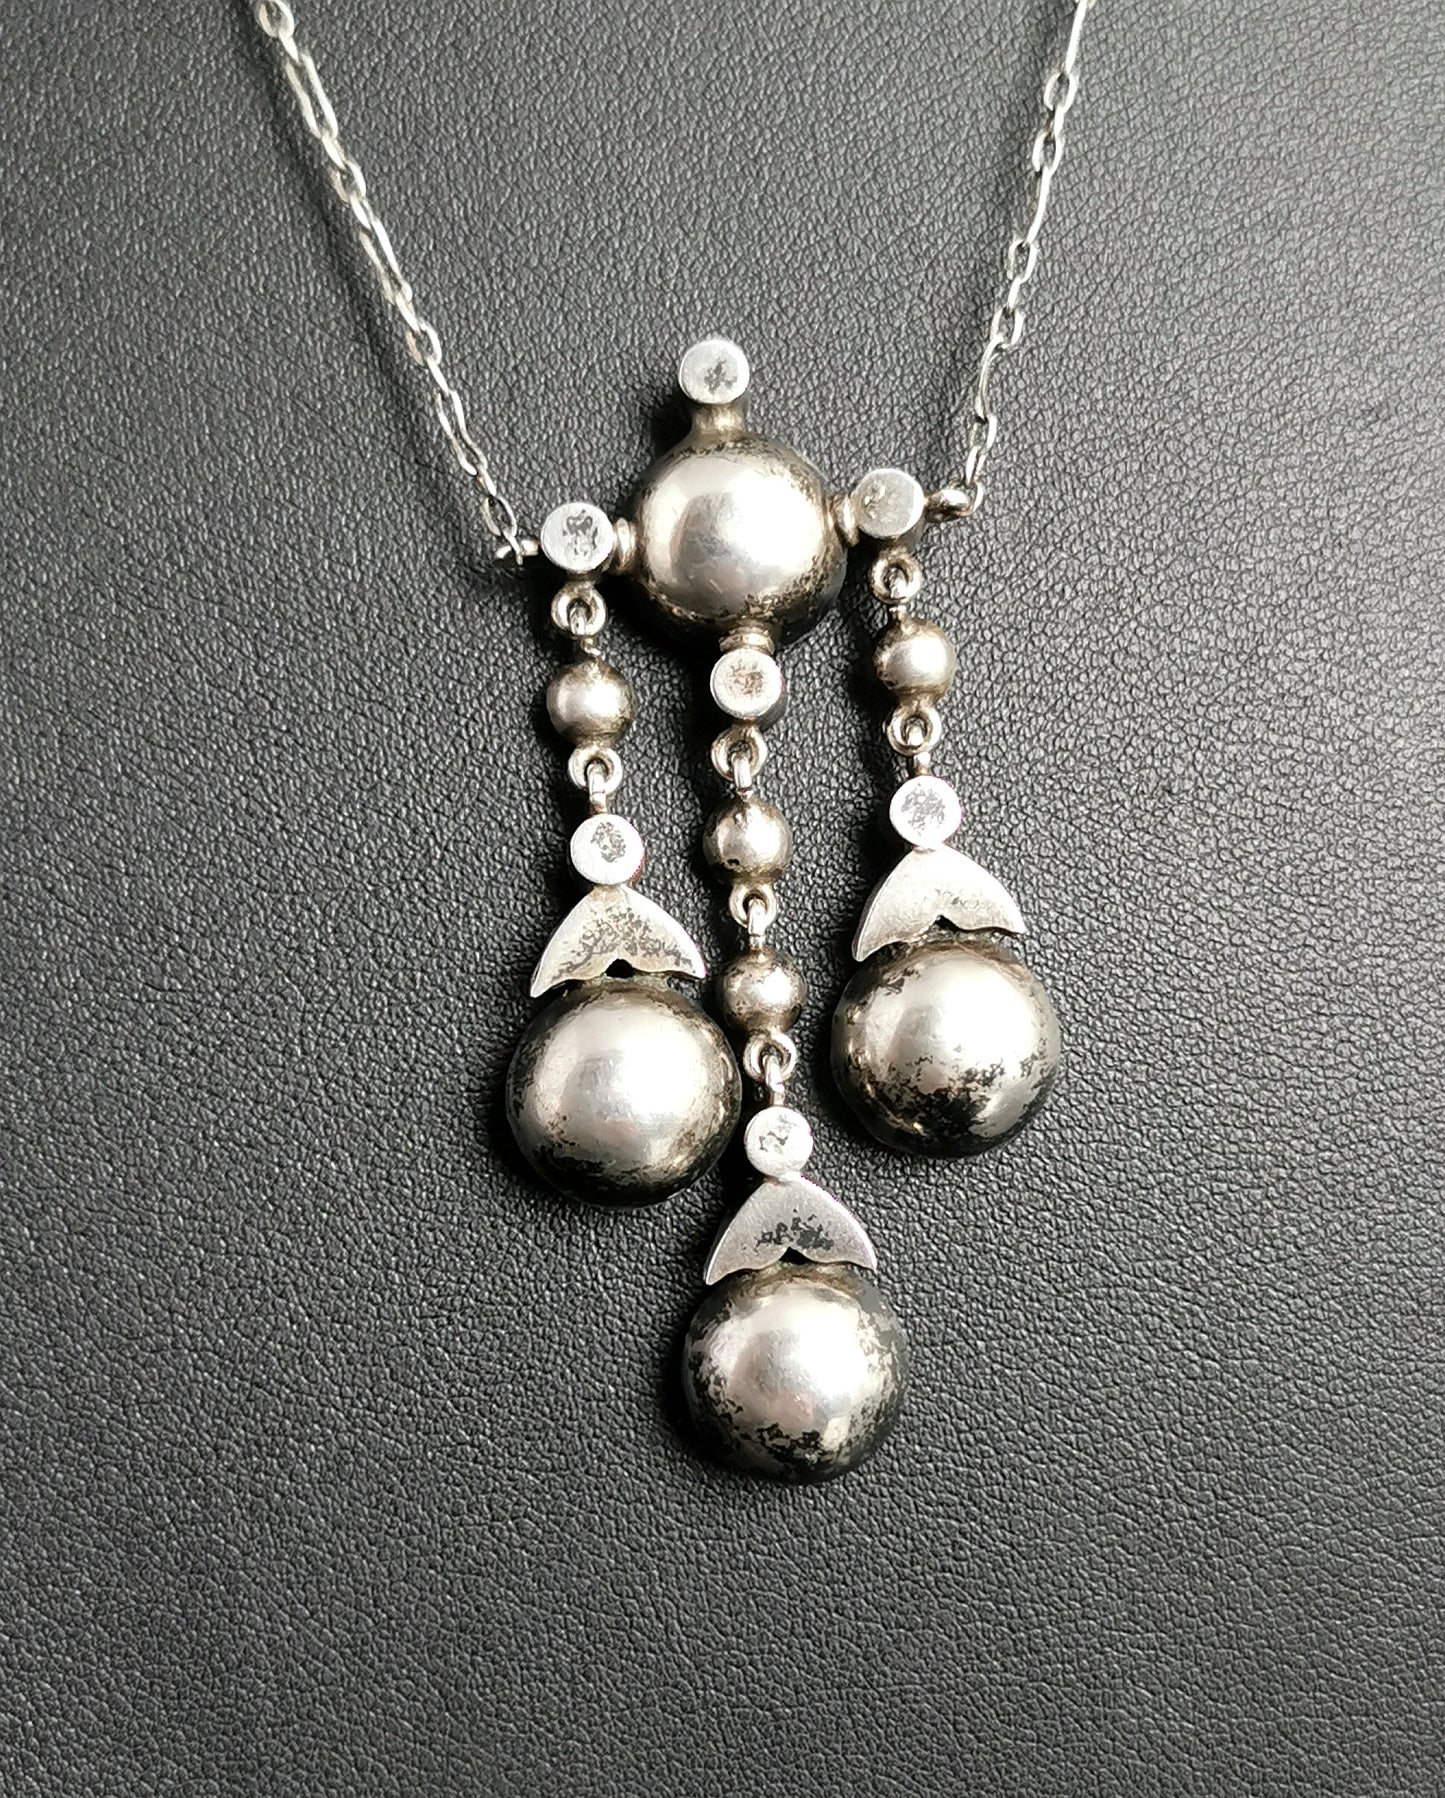 Antique Georgian paste pendant necklace, foiled paste, Sterling silver